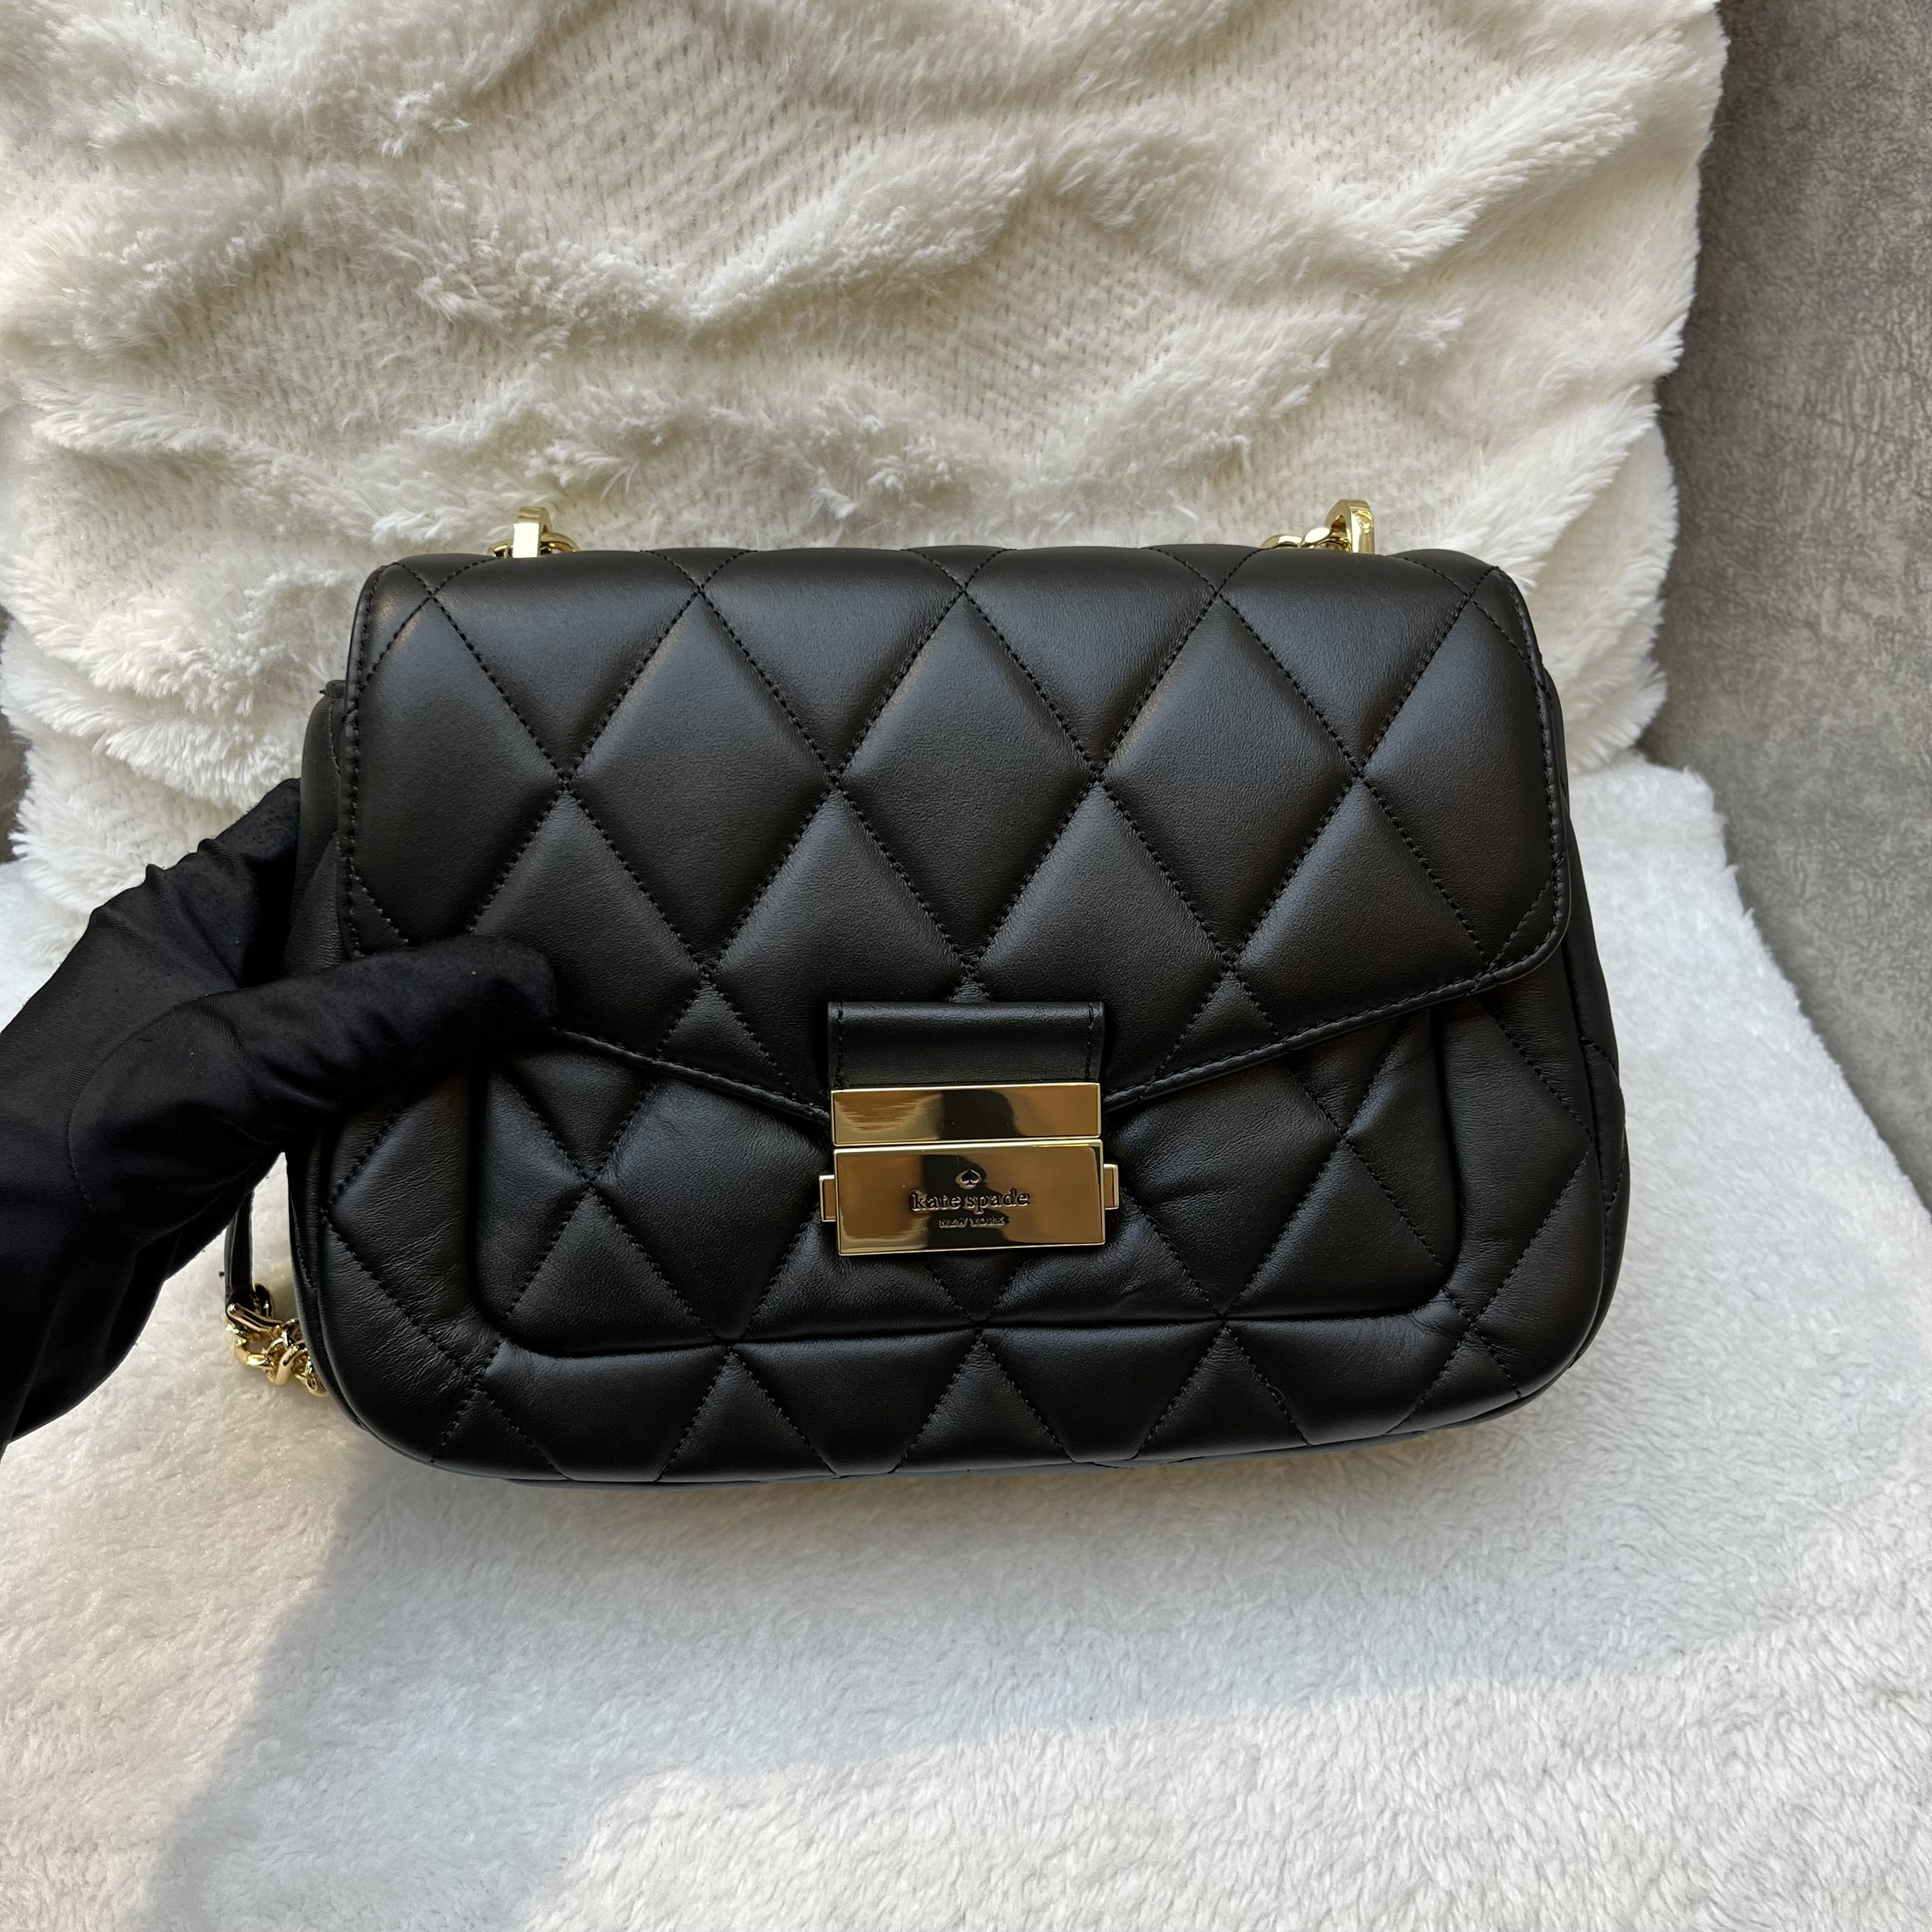 KATE SPADE CAREY SMALL FLAP SHOULDER BAG BLACK – Lbite Luxury Branded ...